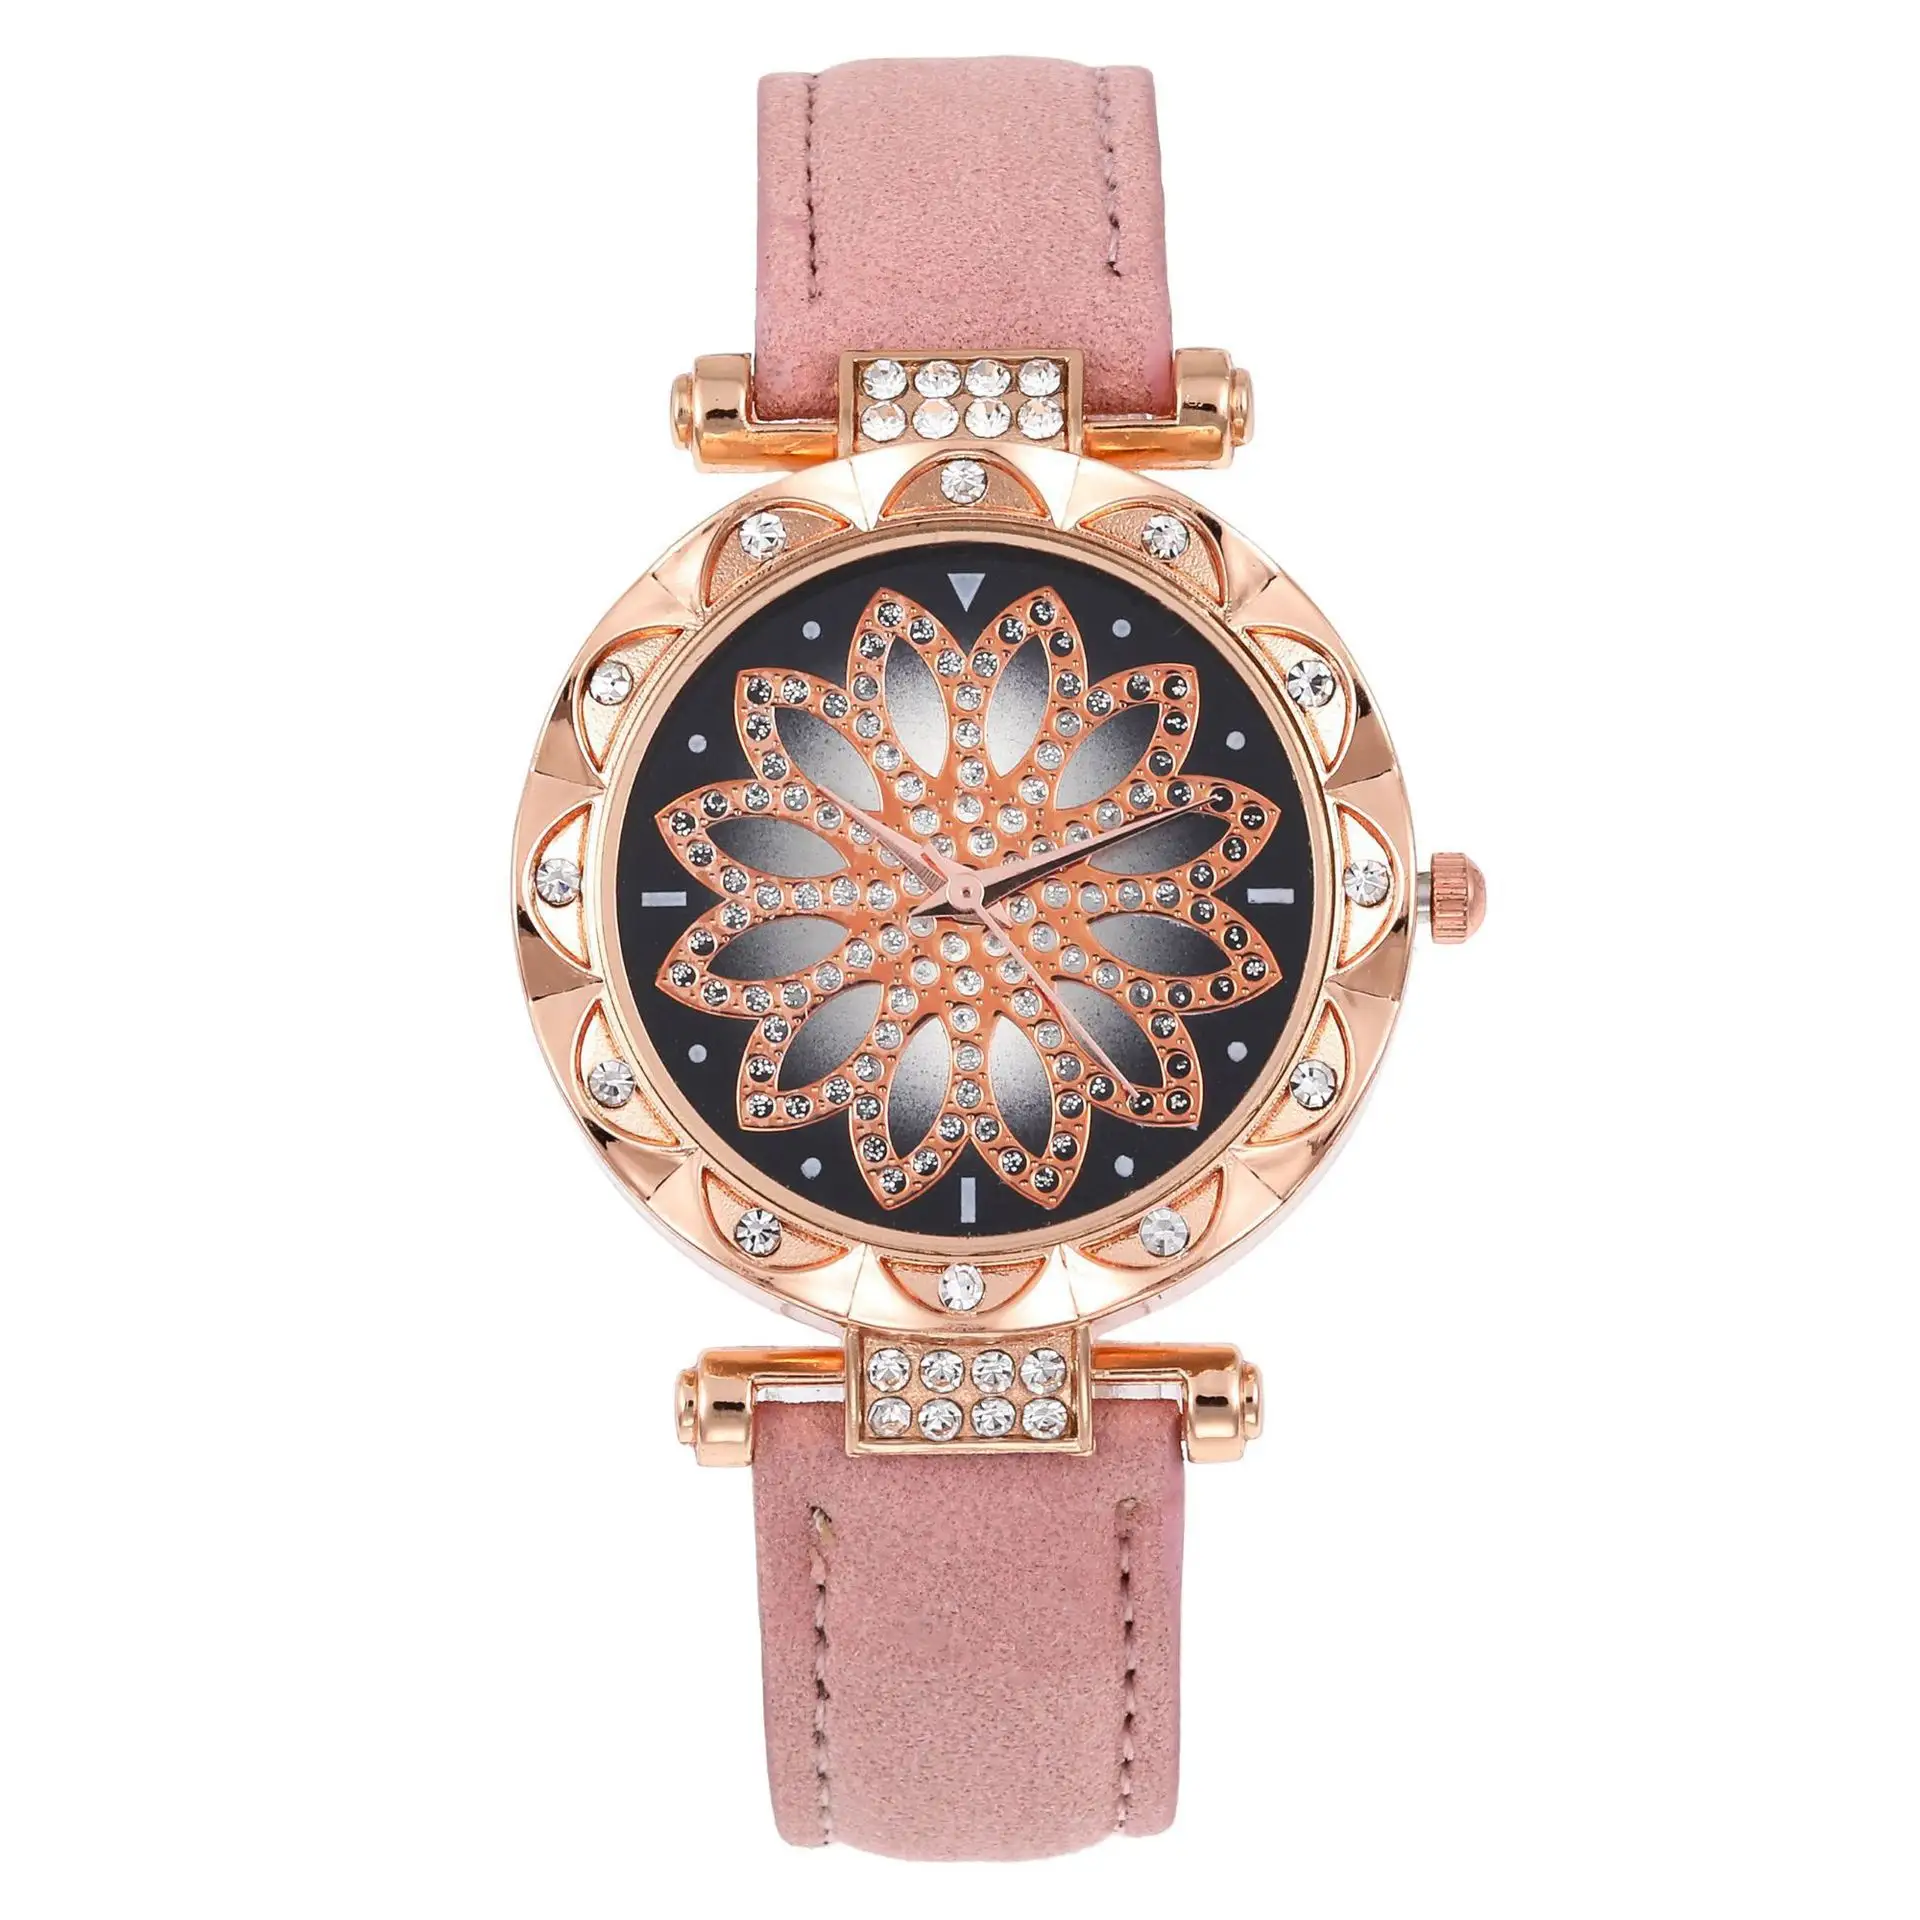 Jam tangan Quartz wanita, 2 buah Set jam tangan emas modis berlian elegan